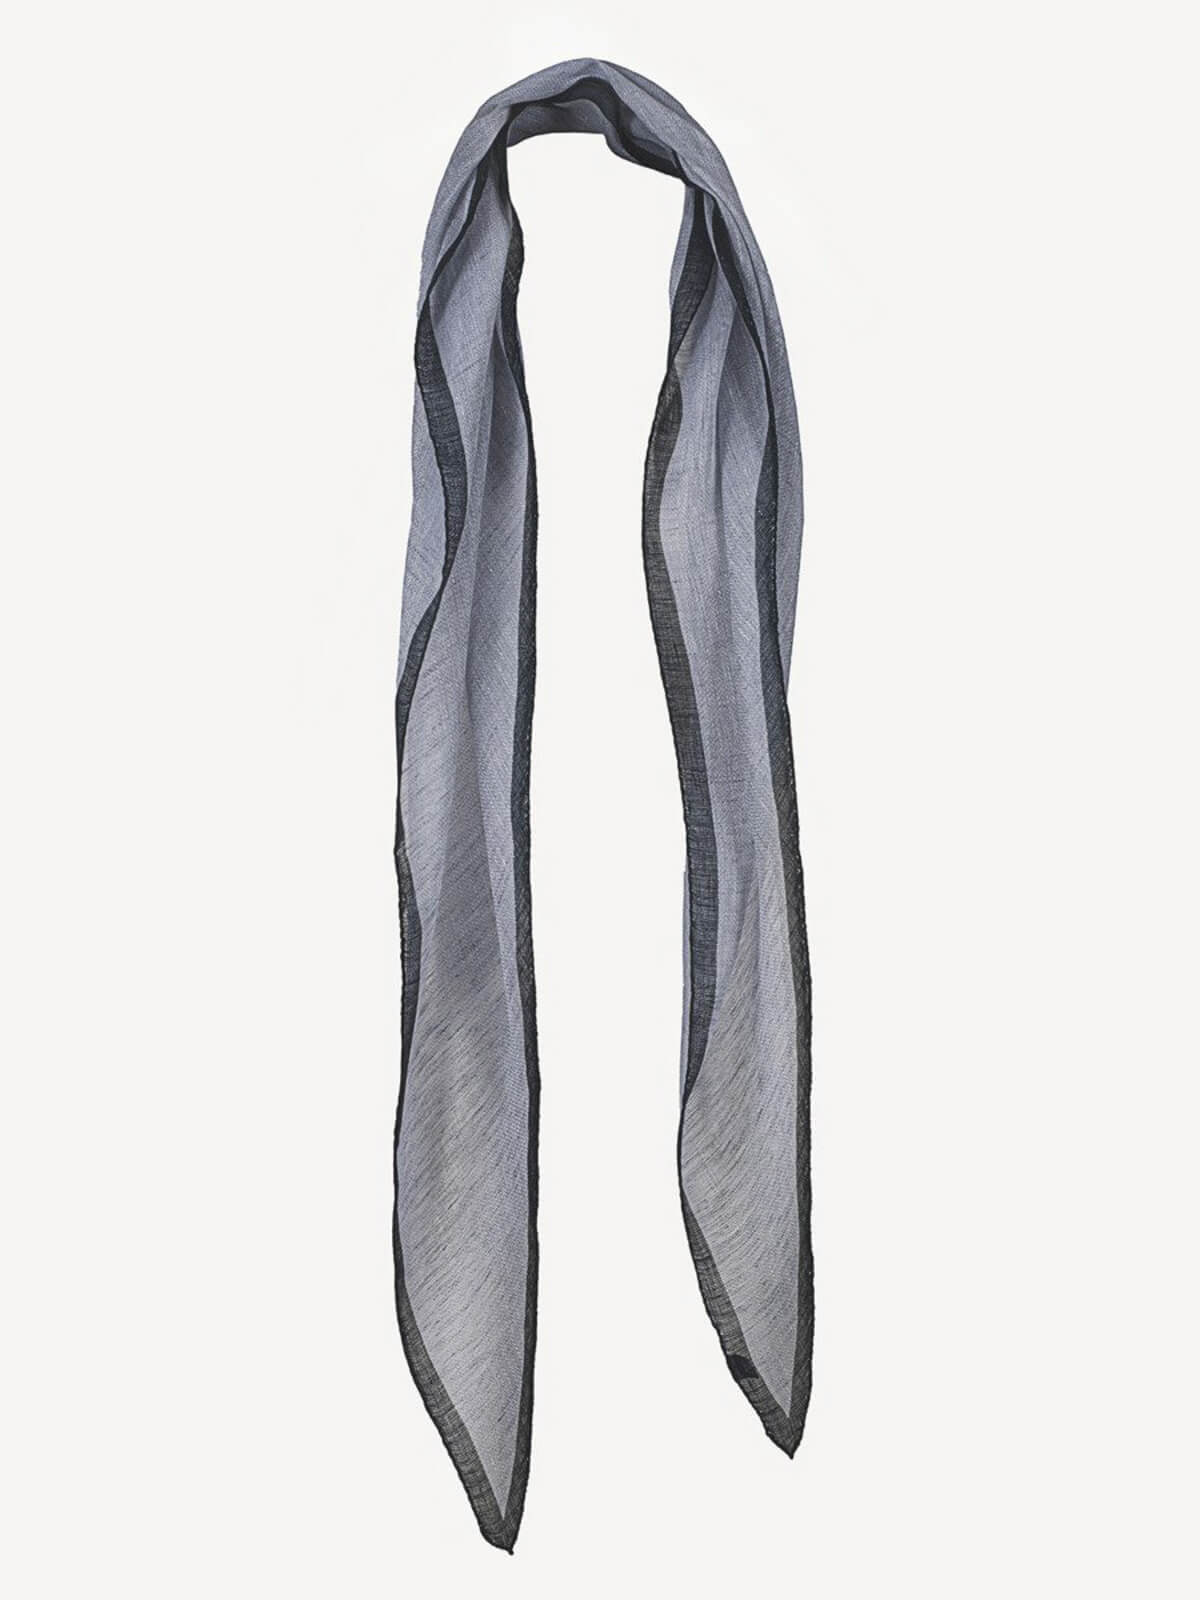 Rhombus Linen Scarf for women 100% Capri light grey and dark grey linen scarf